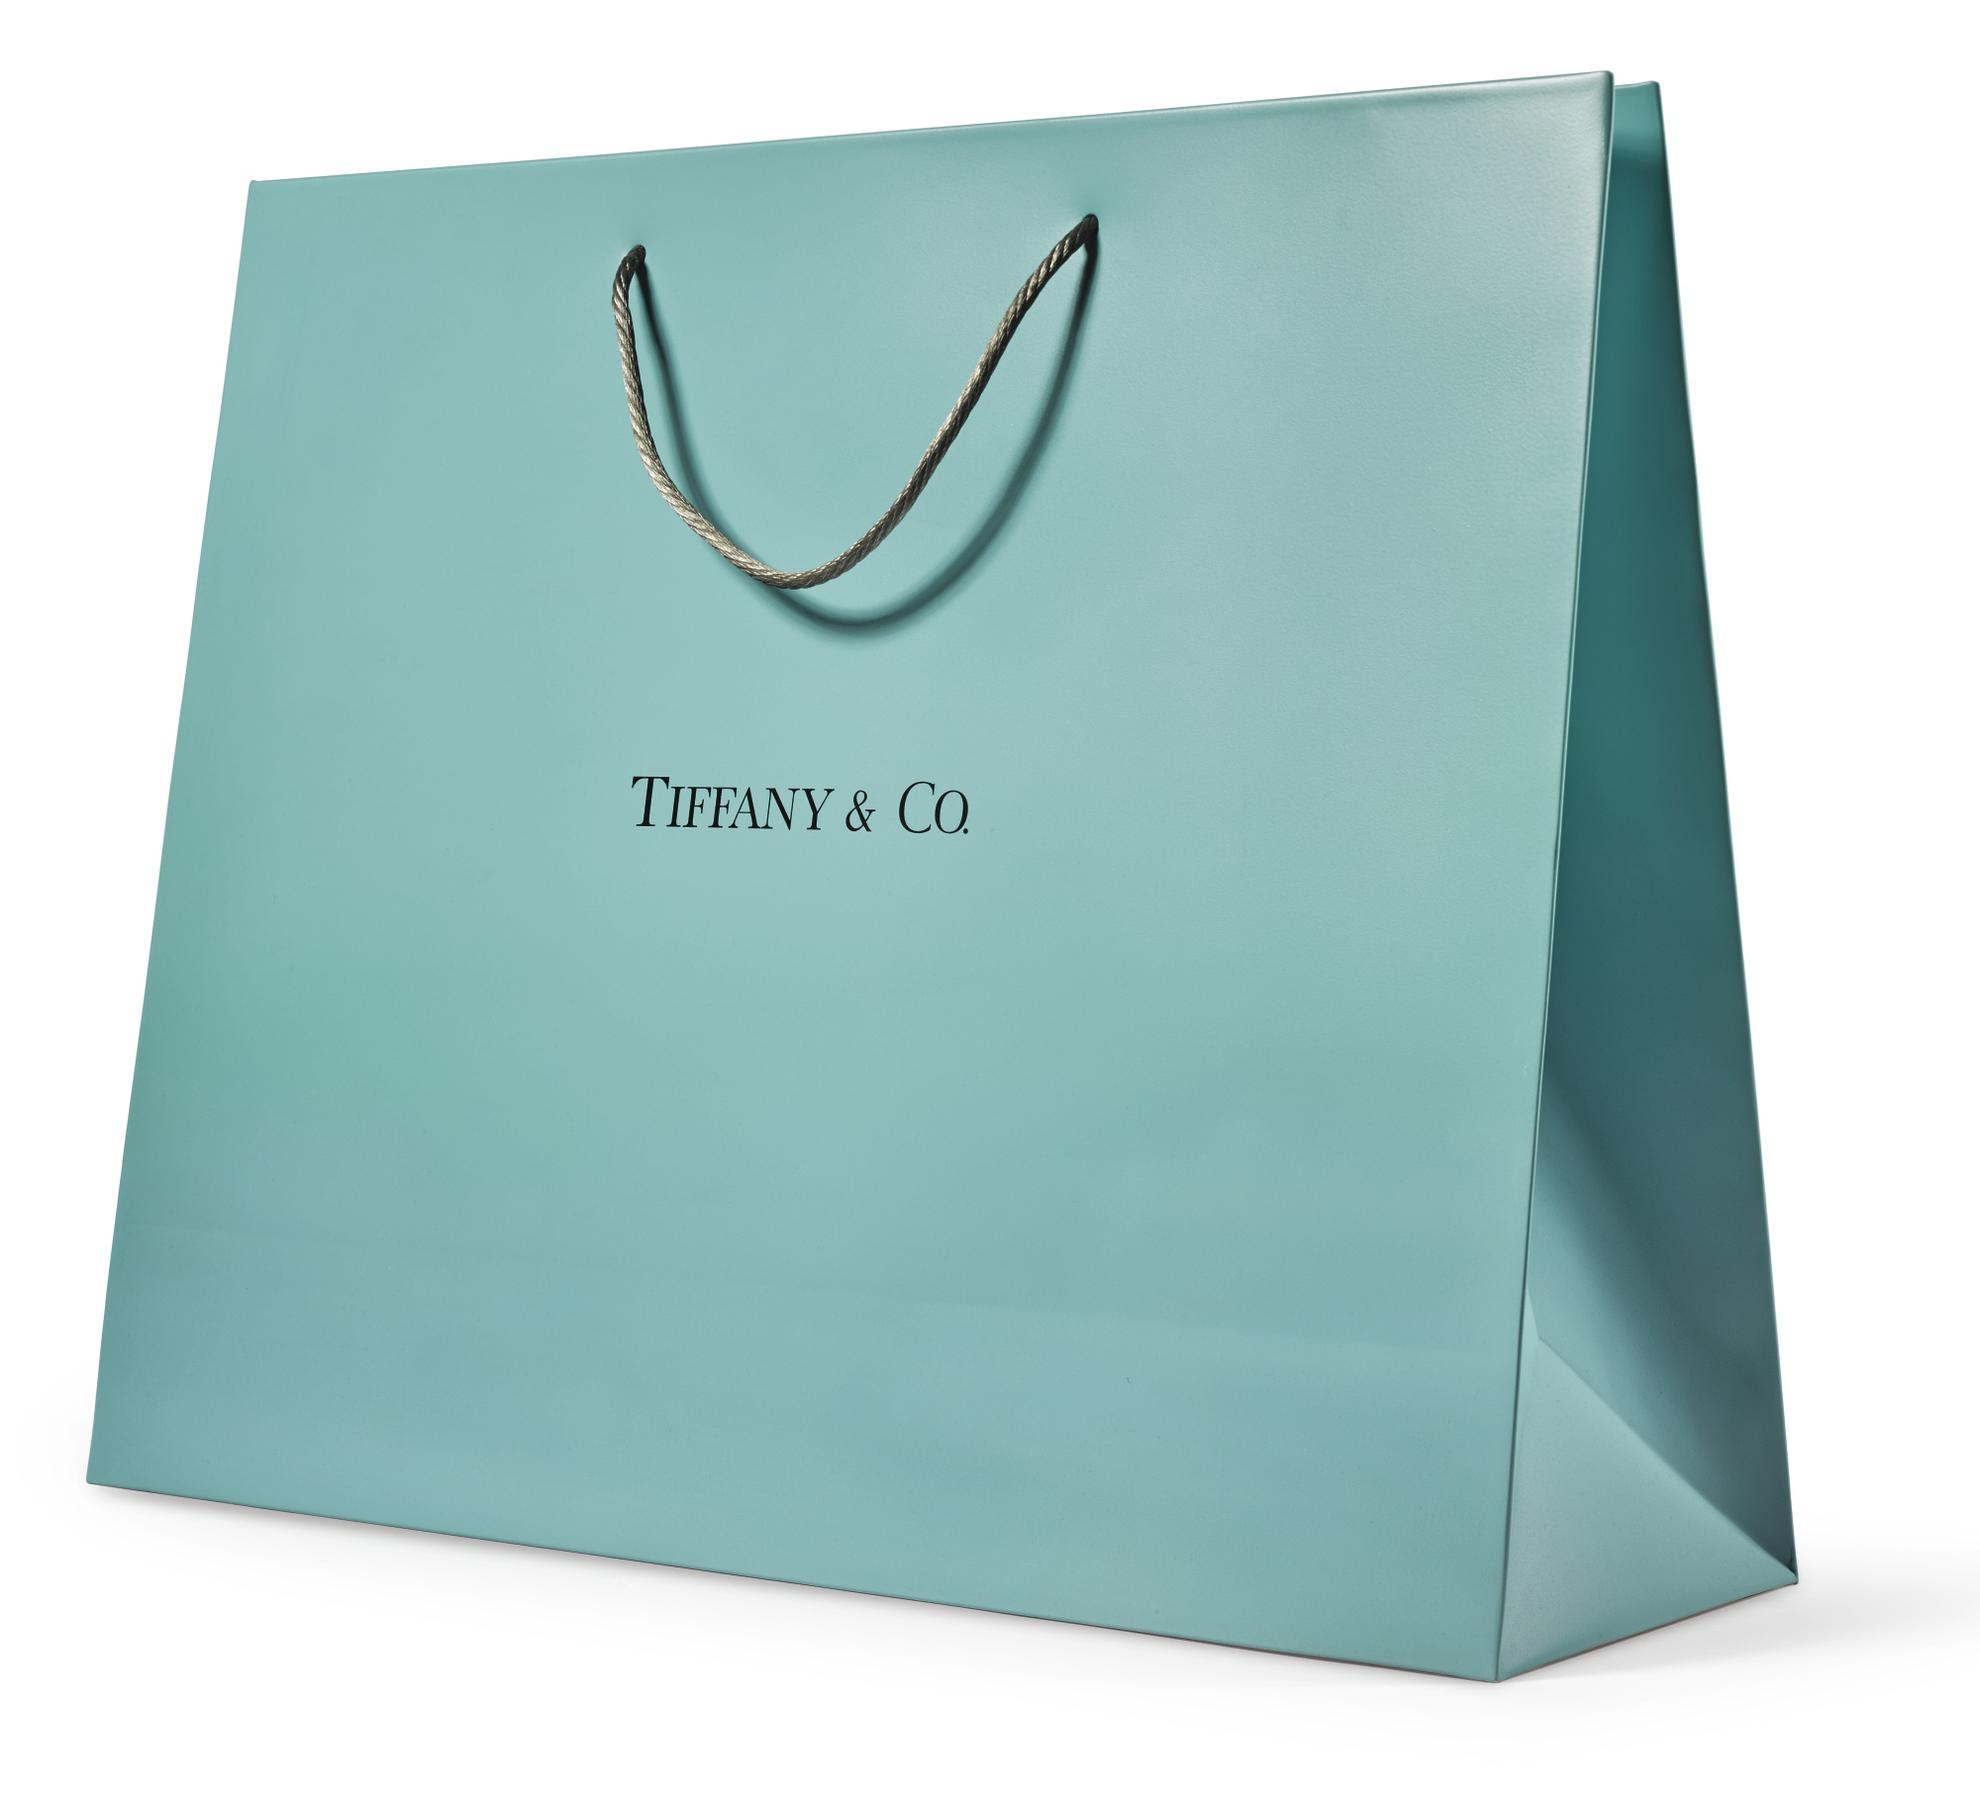 tiffany & co shopping bag